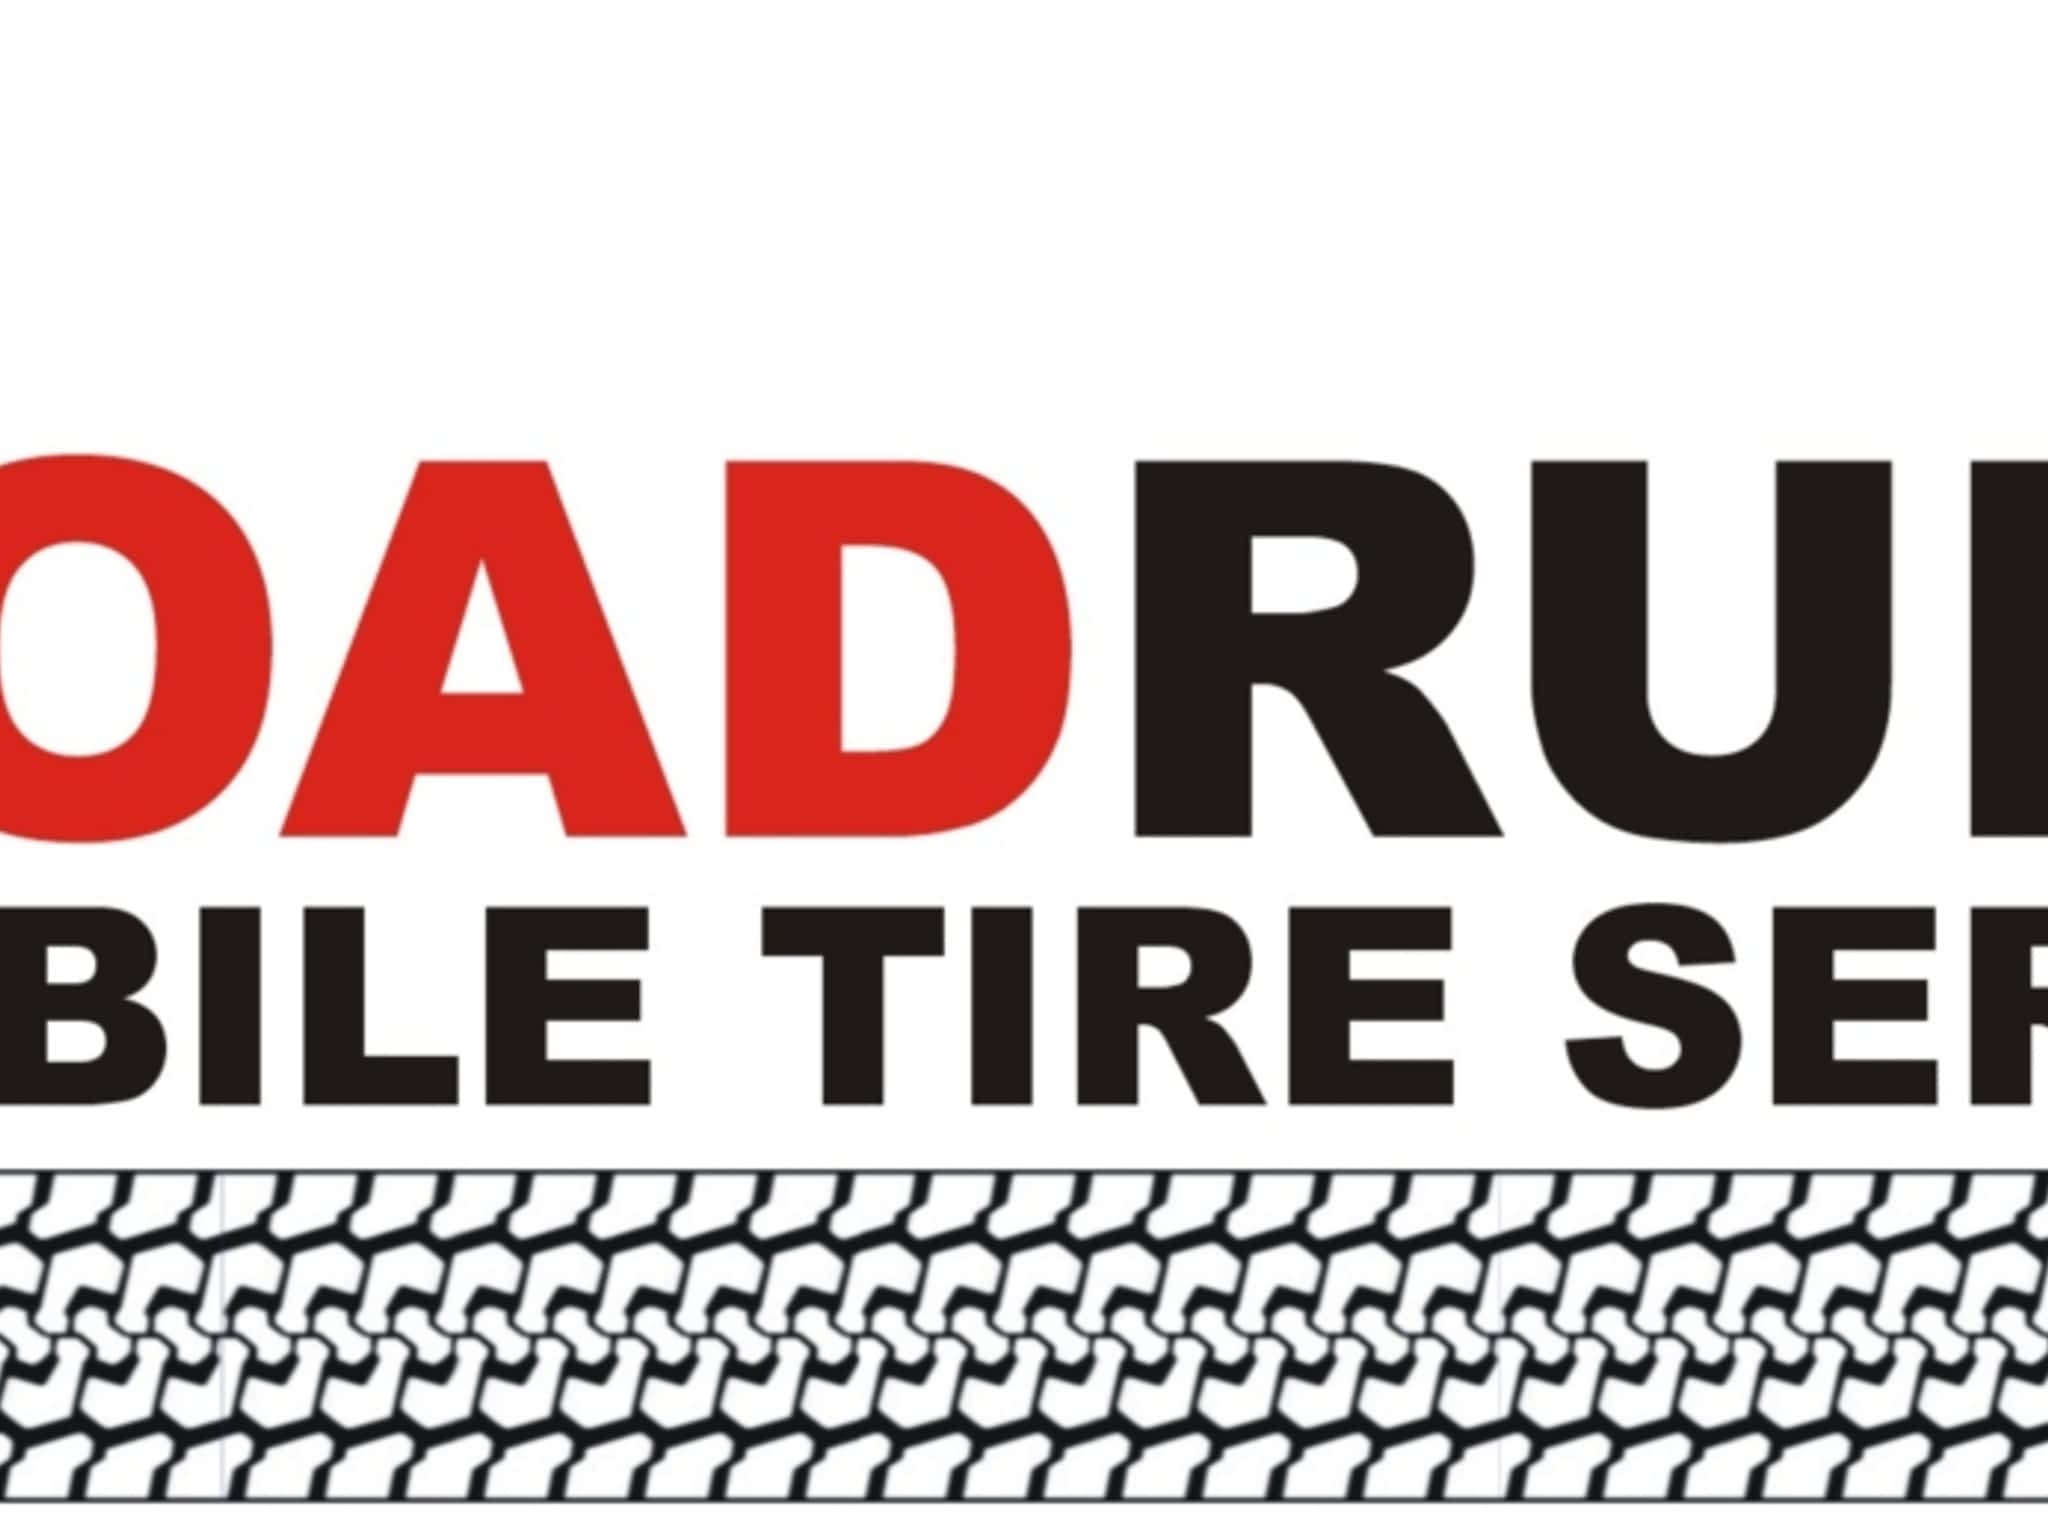 photo Road Runner Mobile Tire Service Ltd